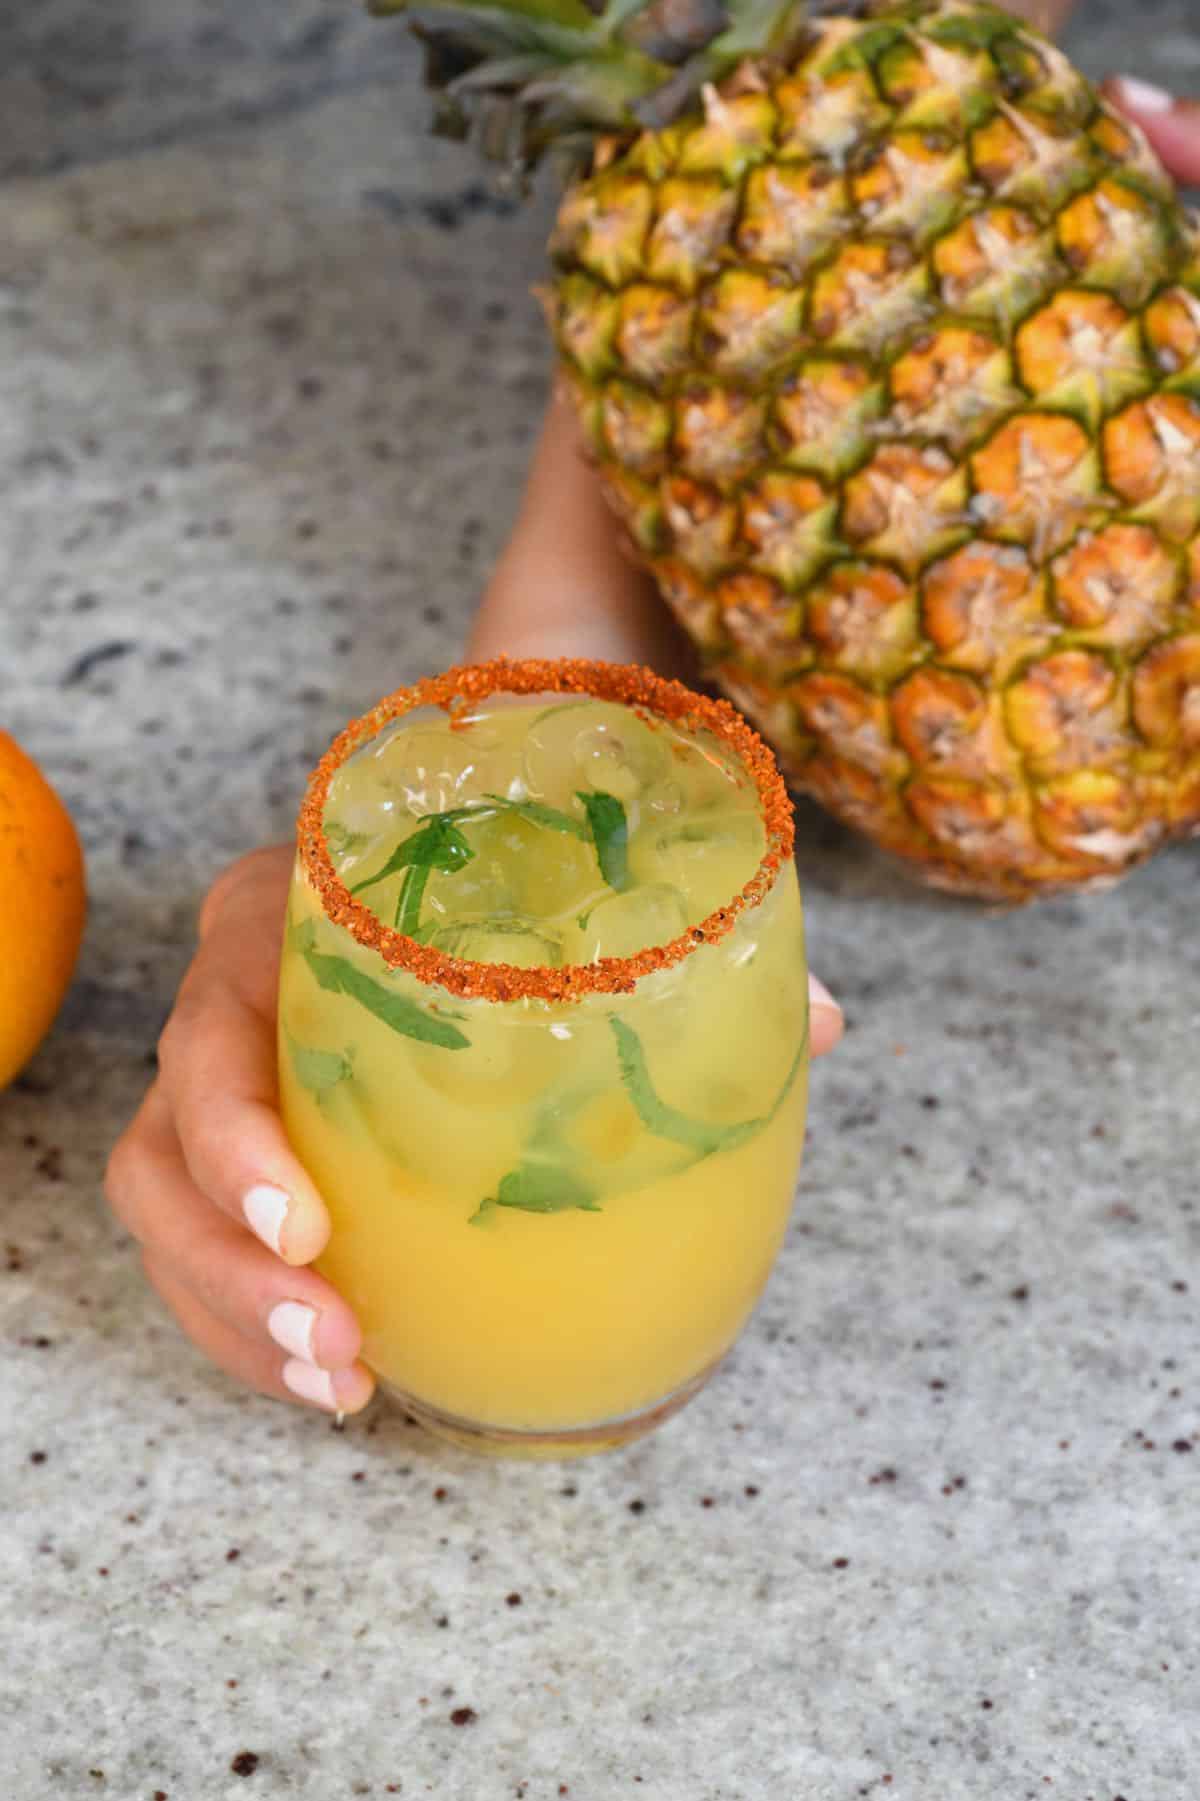 Pineapple Orange - Variety Juices